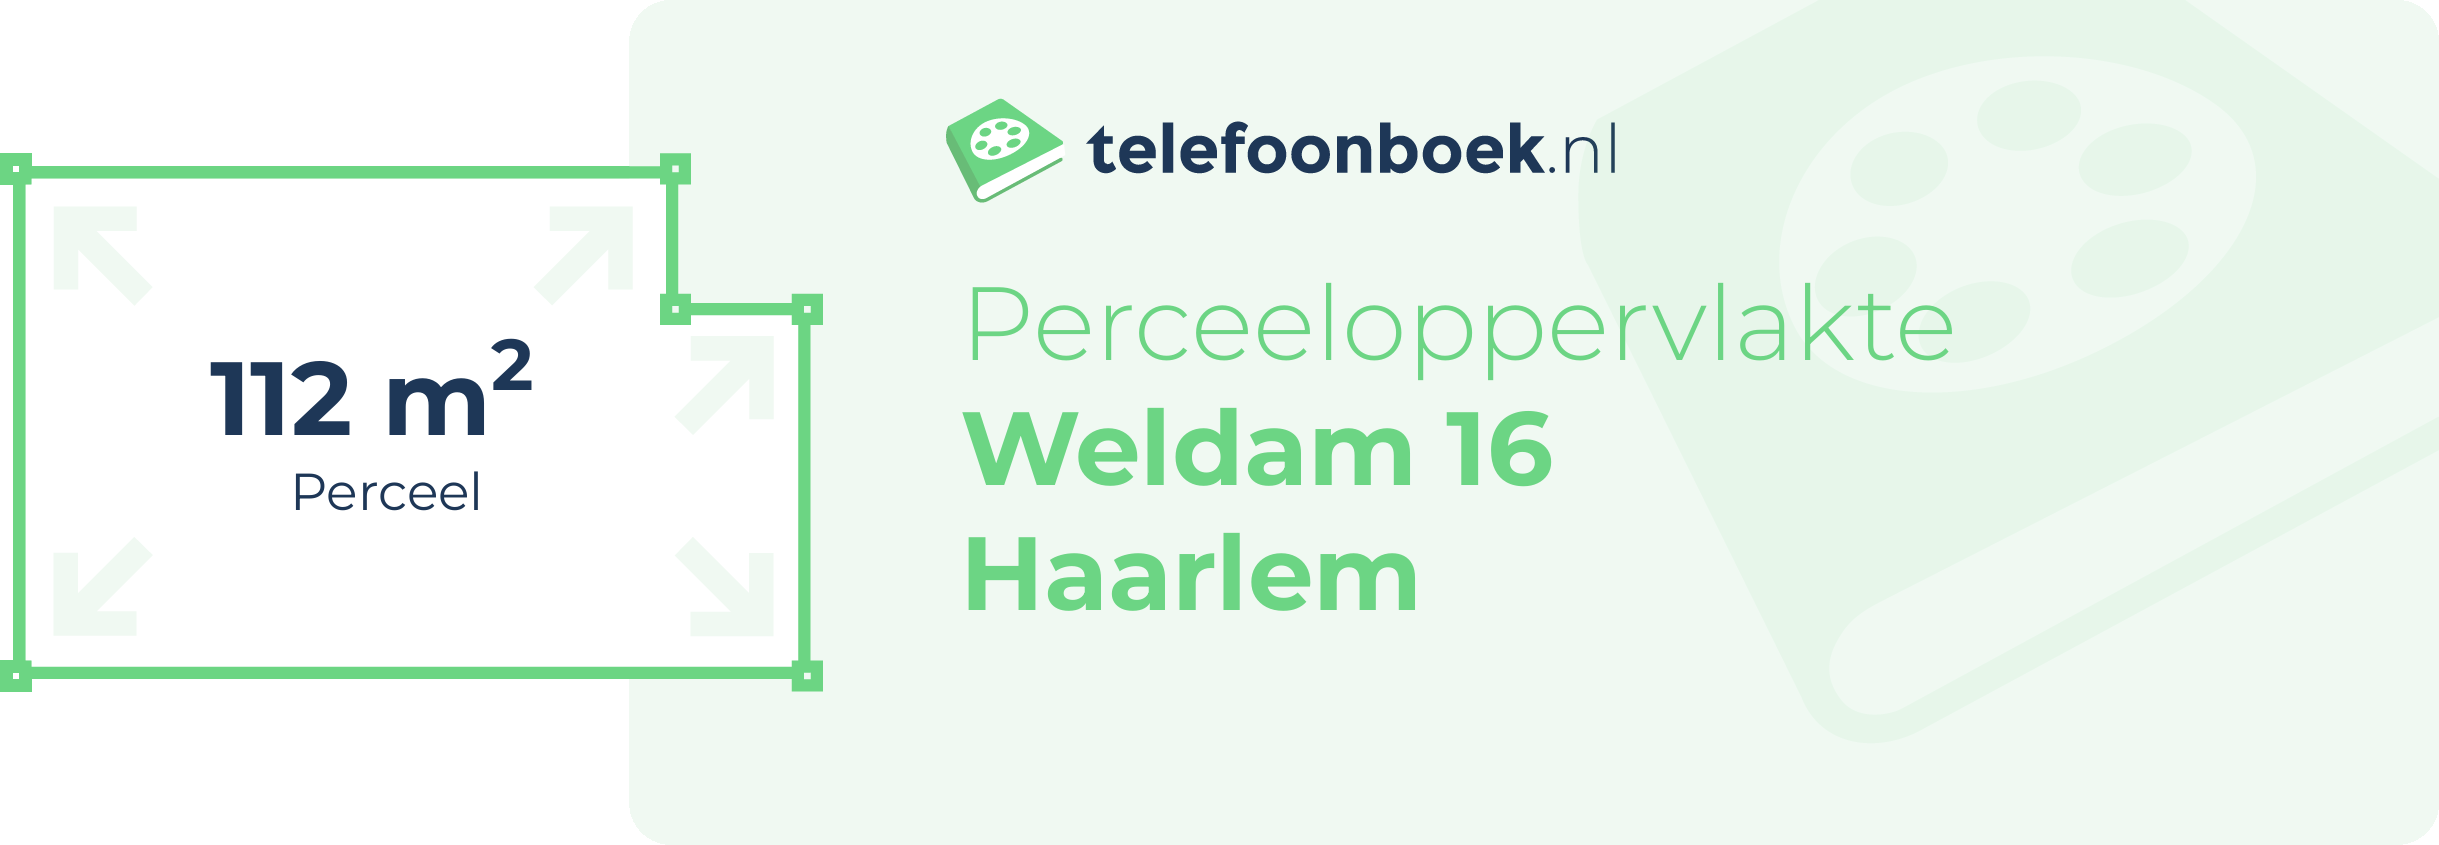 Perceeloppervlakte Weldam 16 Haarlem